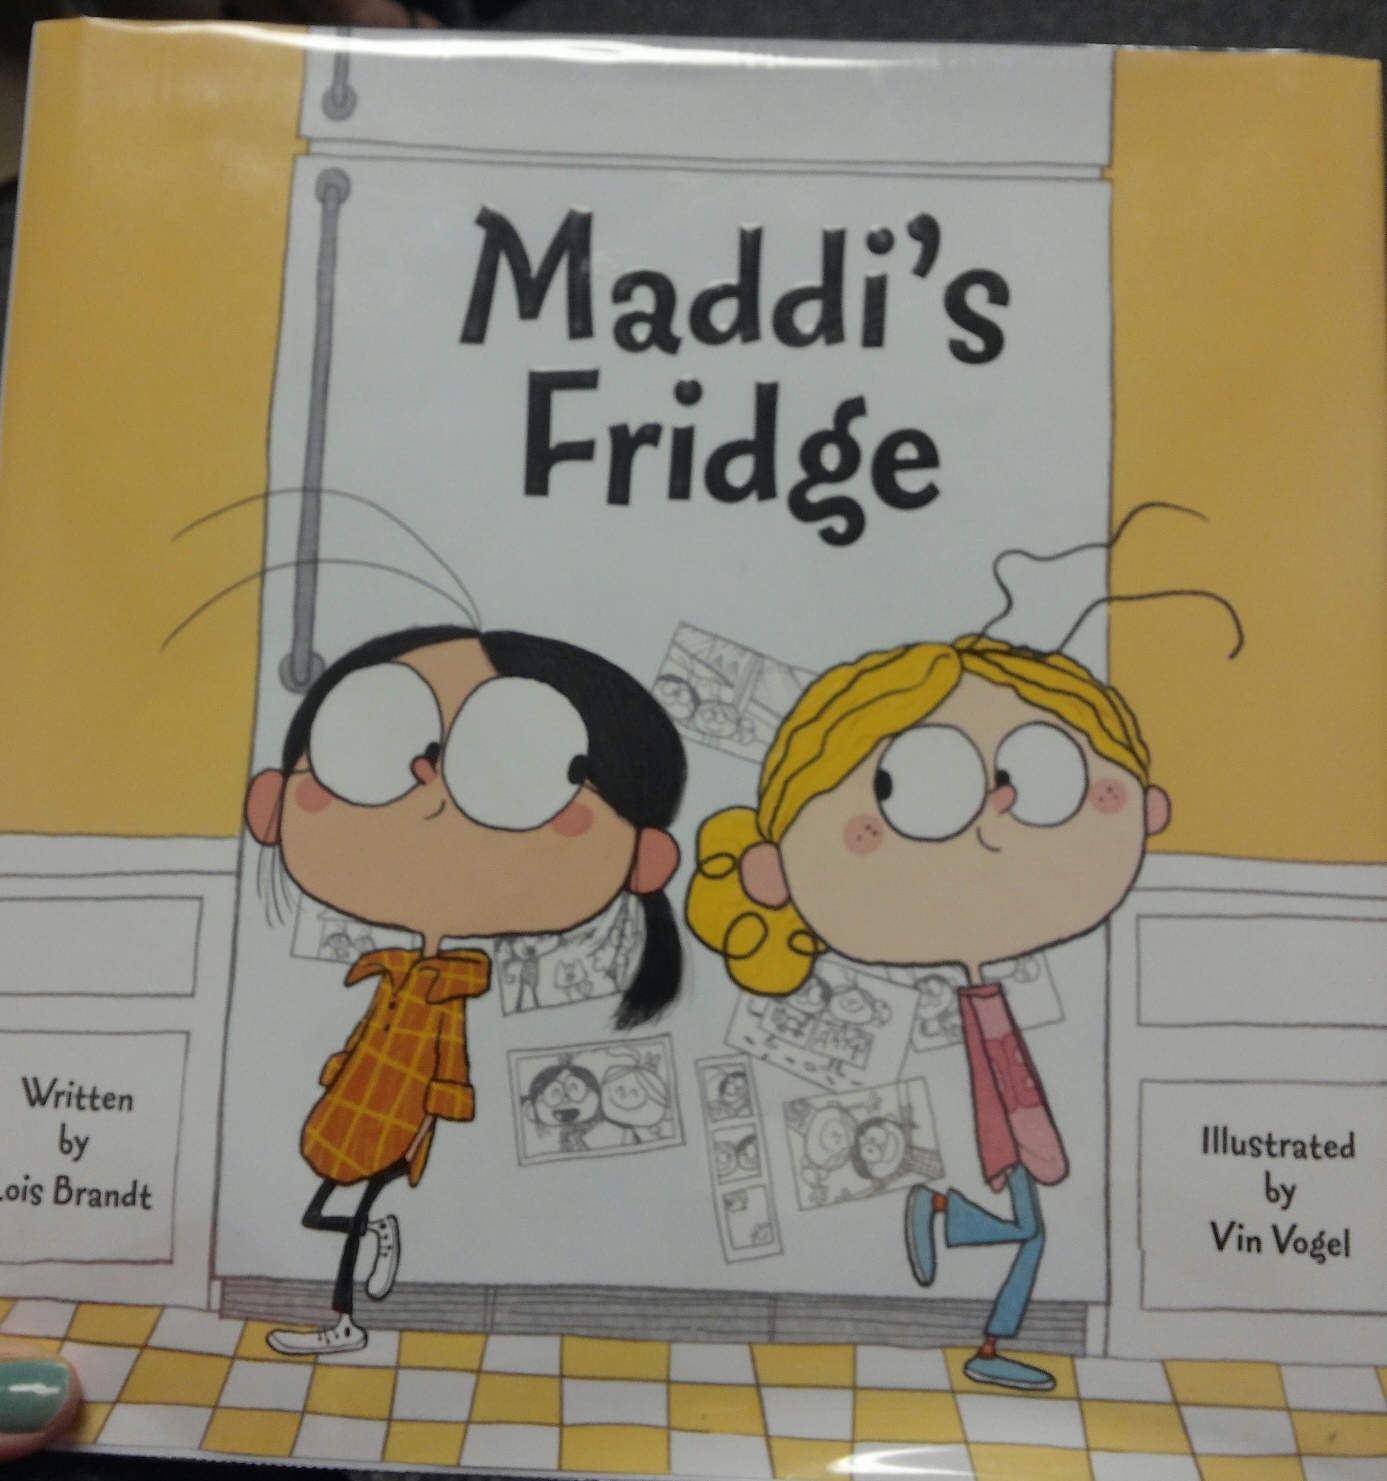 Maddies fridge cover.jpg